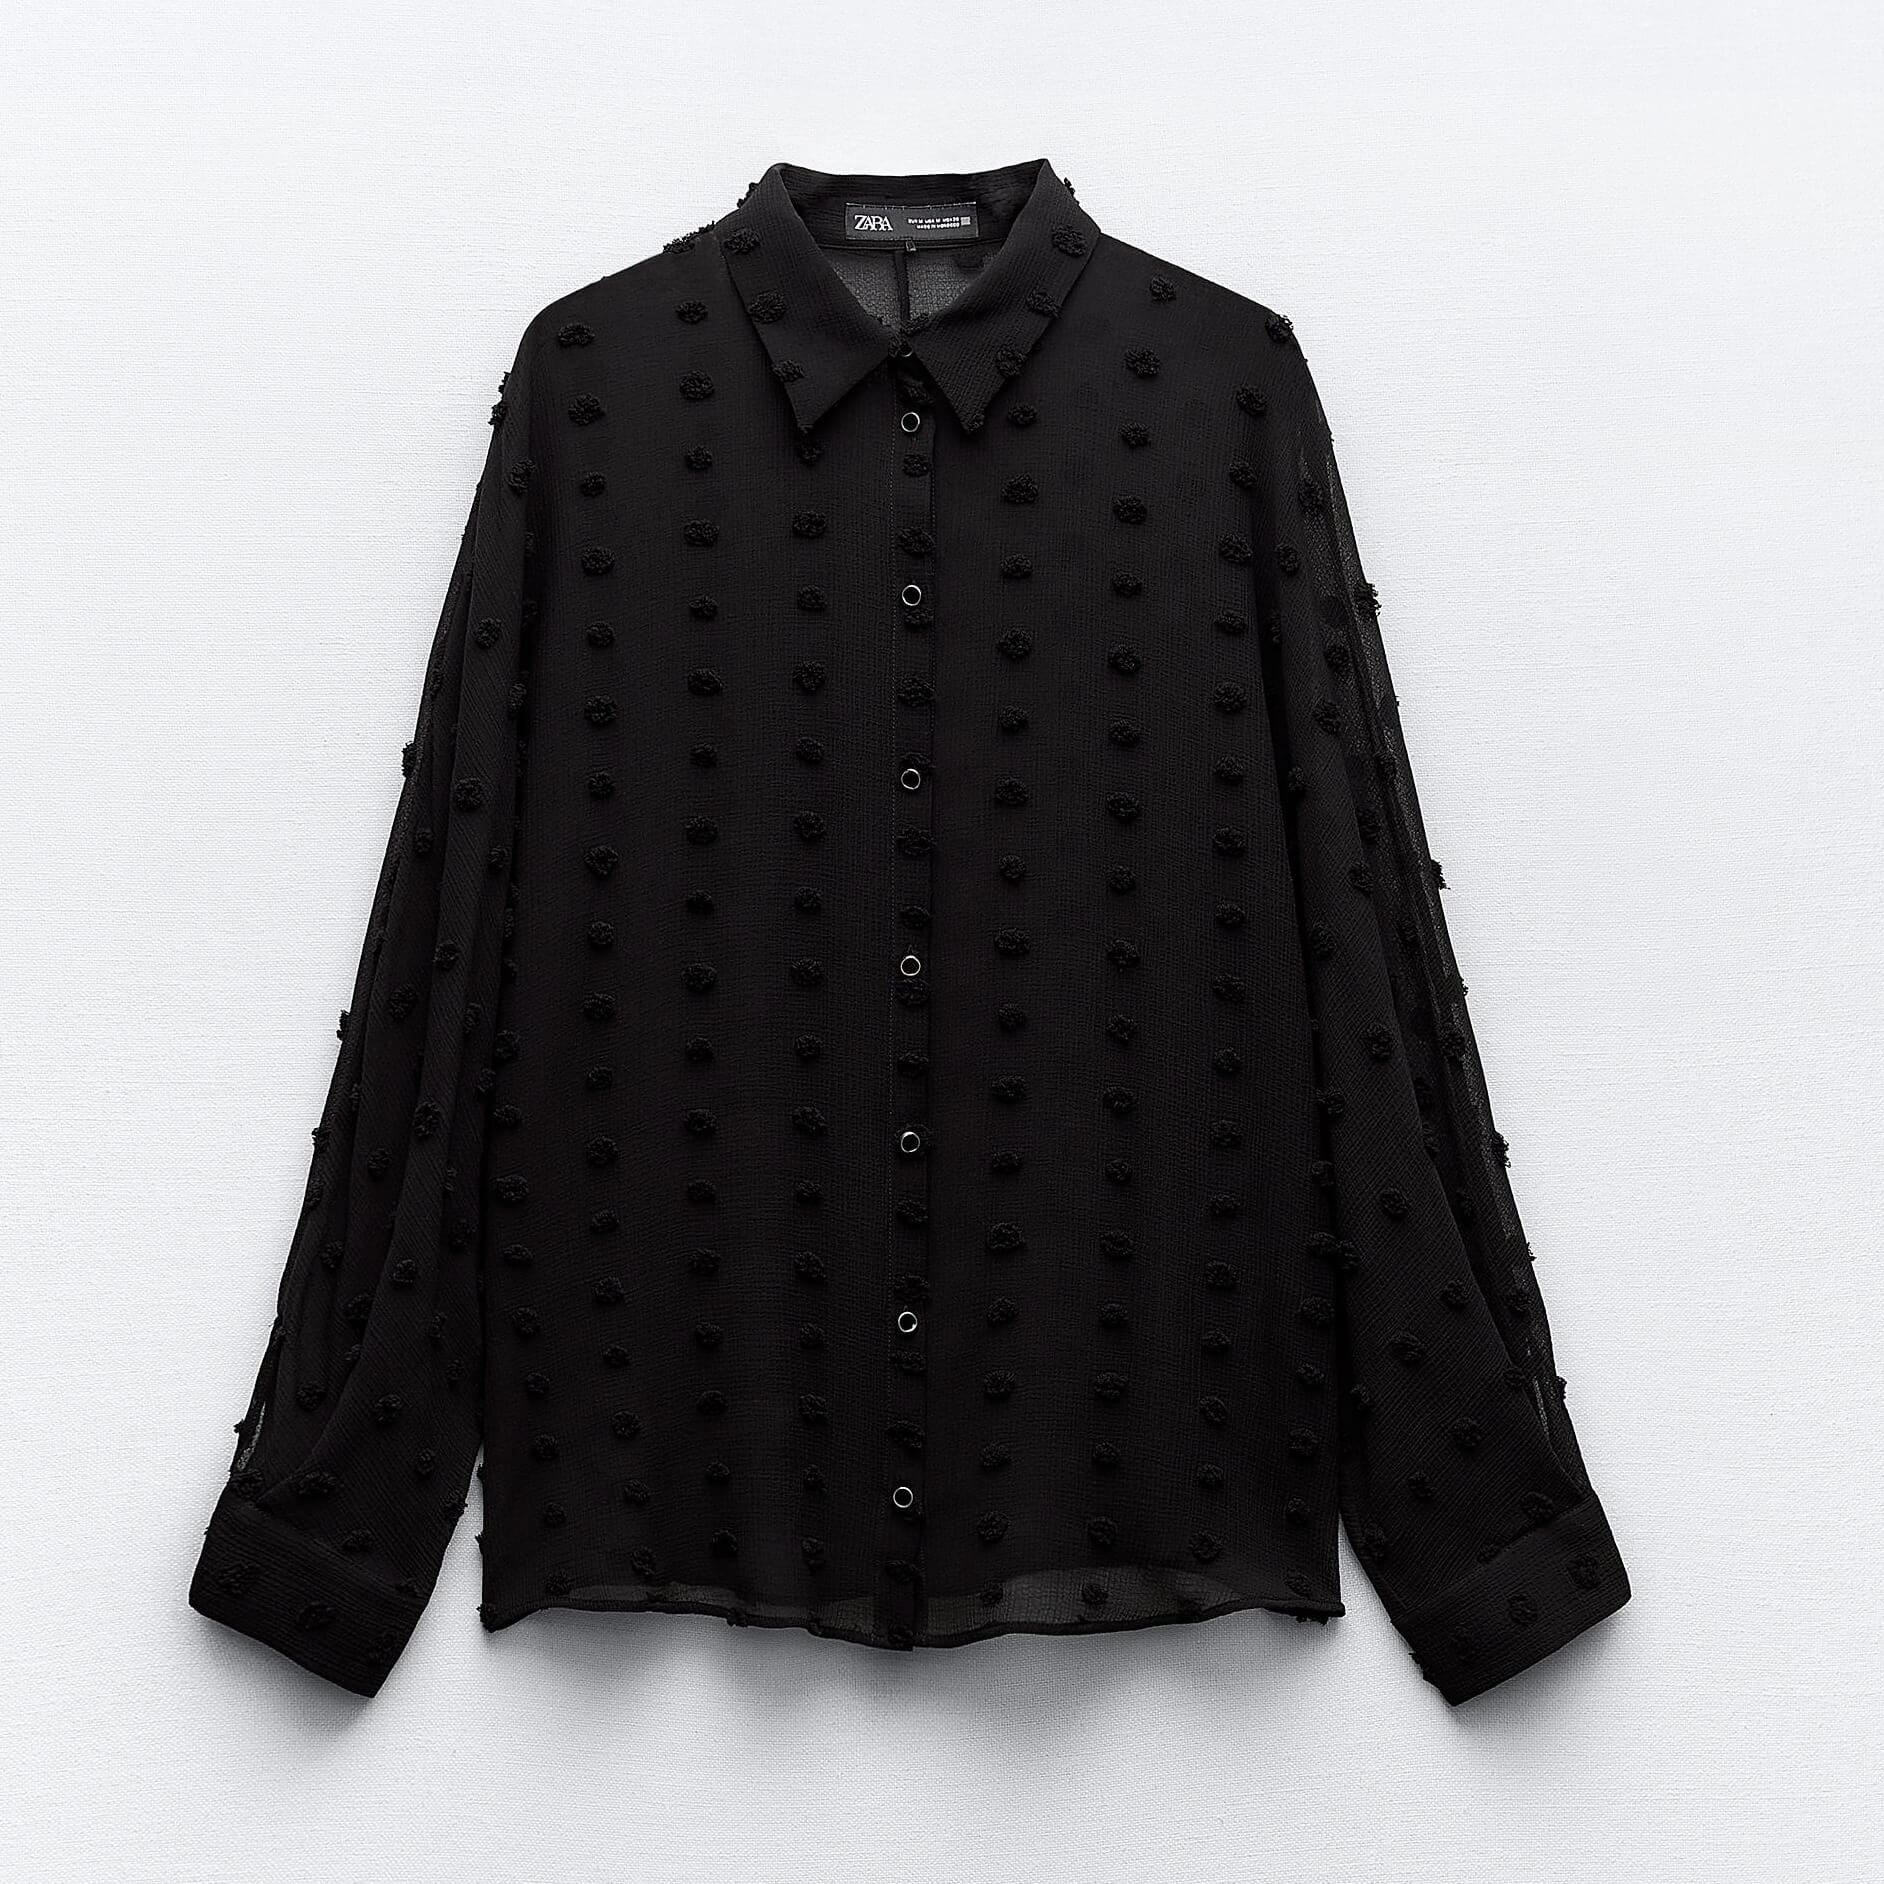 Рубашка Zara Semi-sheer Raised Polka Dot, черный рубашка zara embroidered floral semi sheer черный